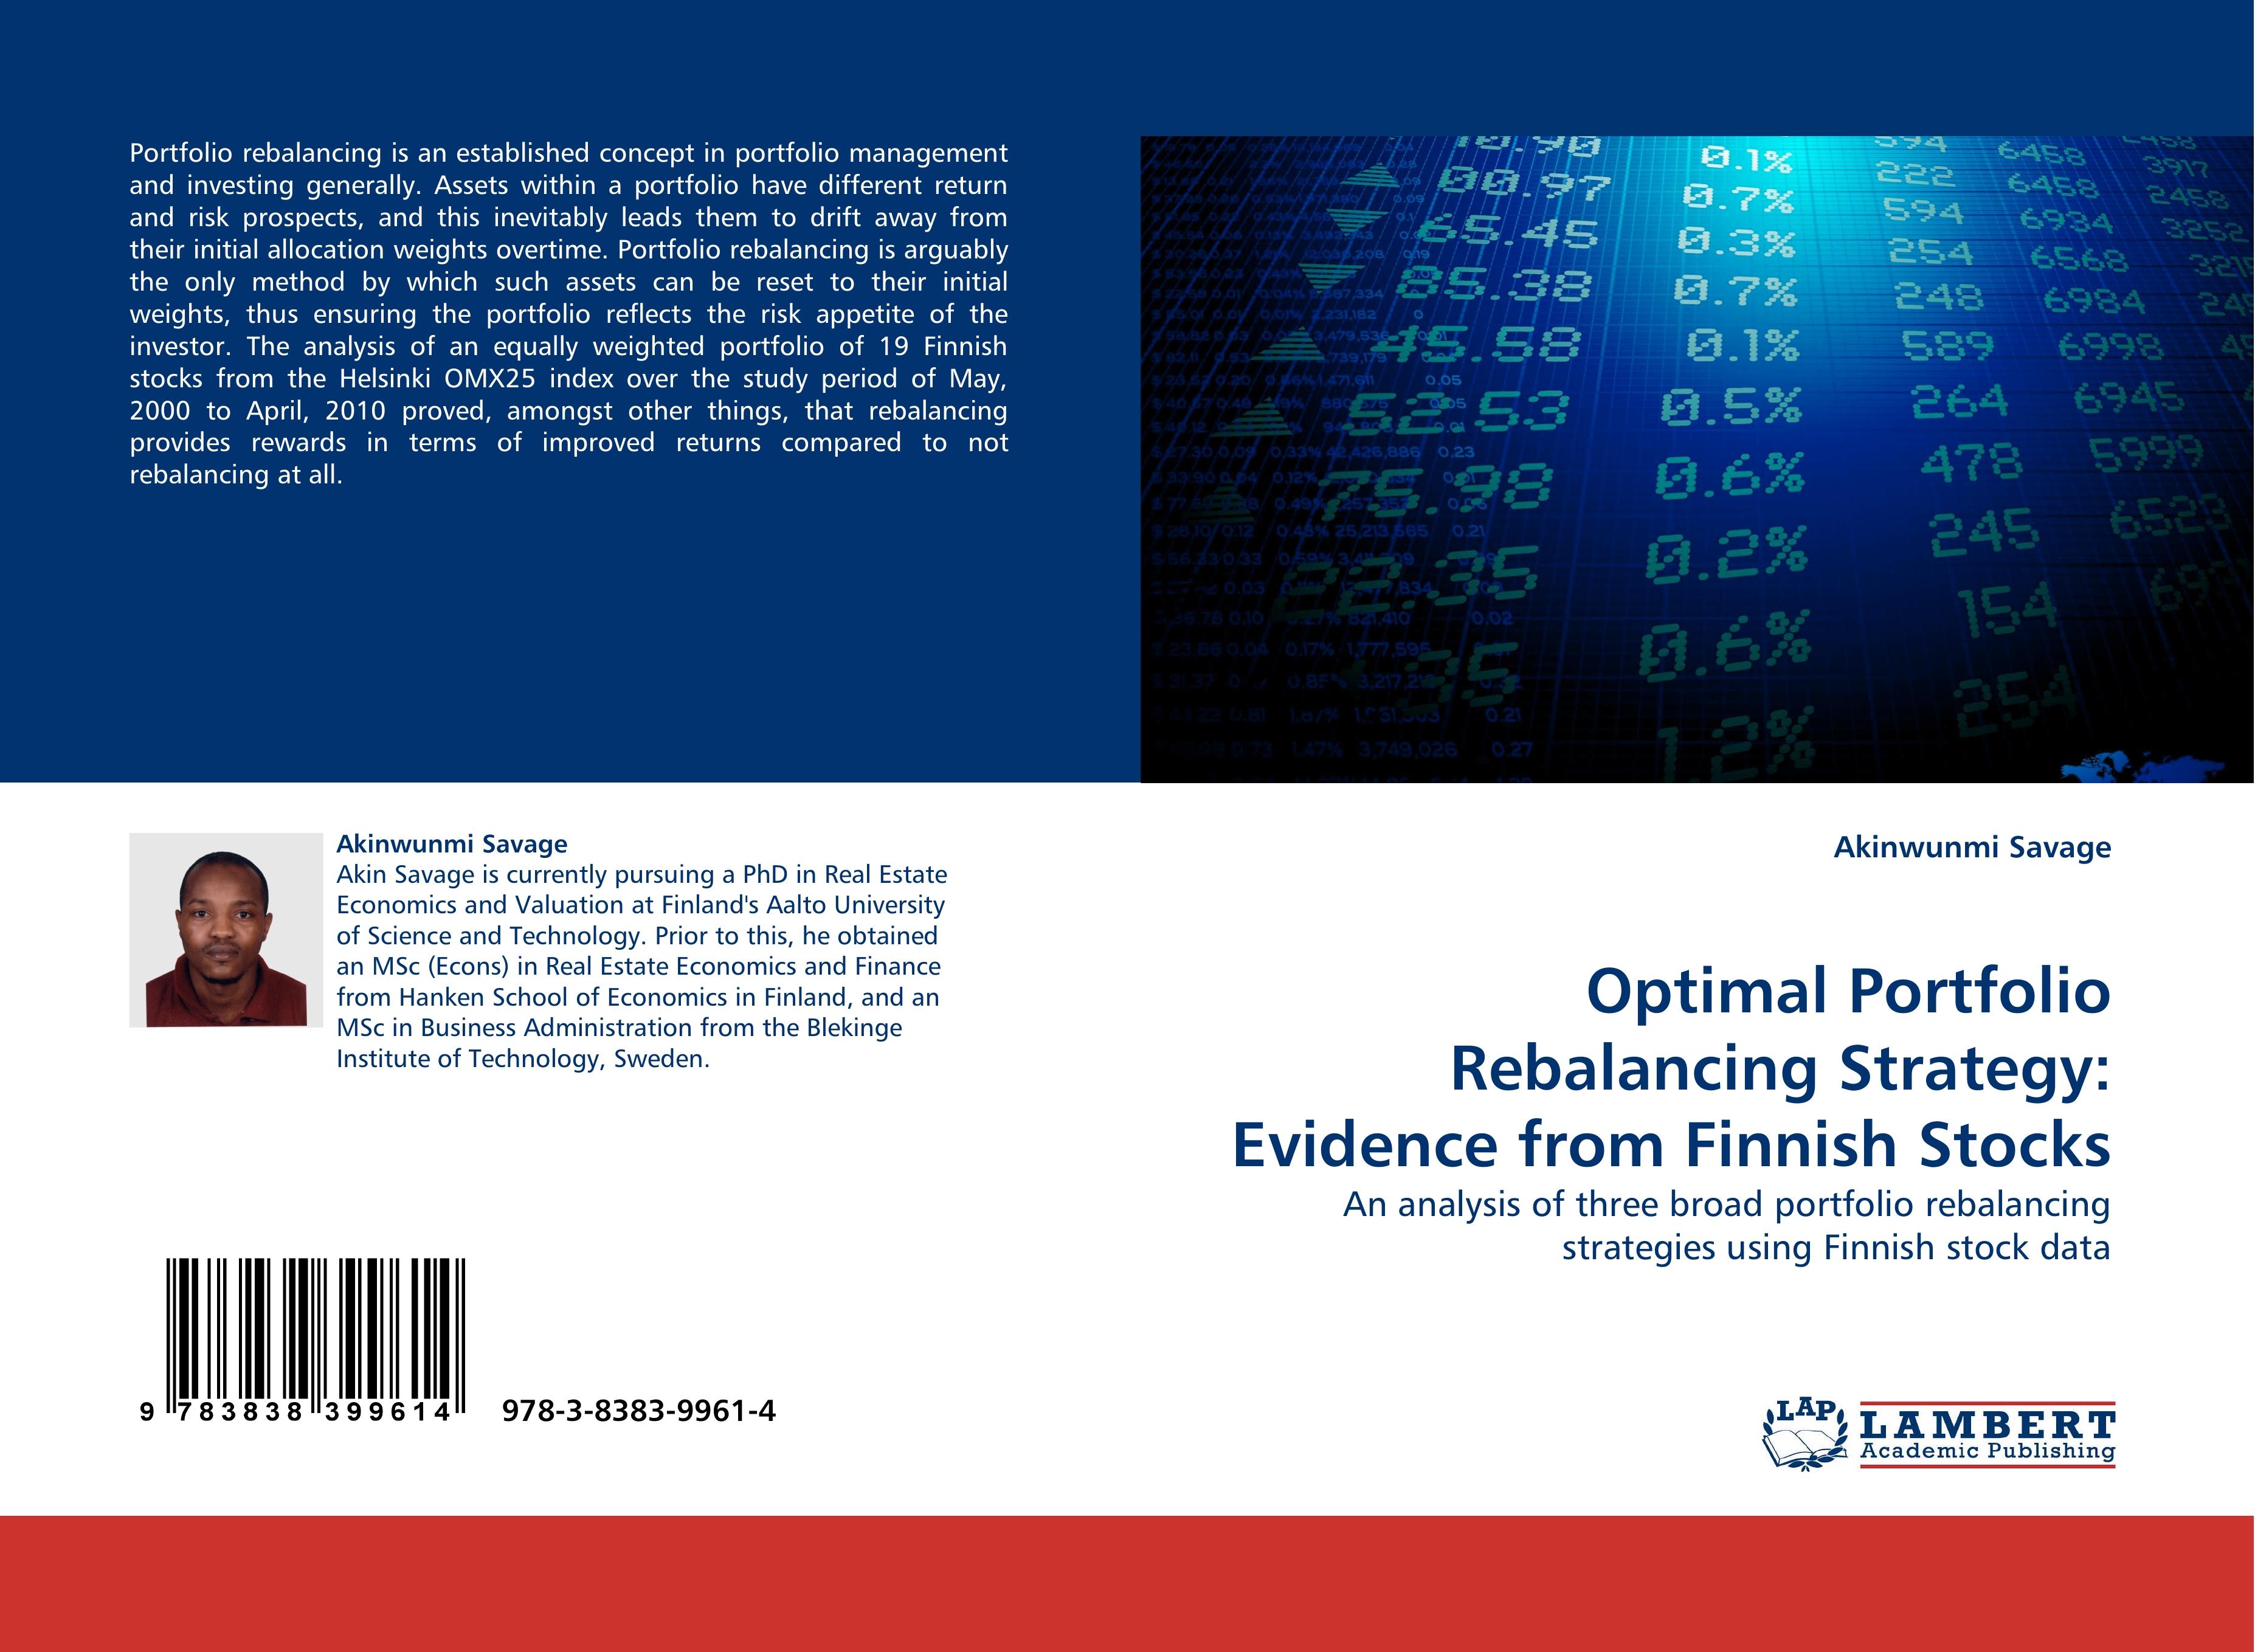 Optimal Portfolio Rebalancing Strategy: Evidence from Finnish Stocks - Akinwunmi Savage